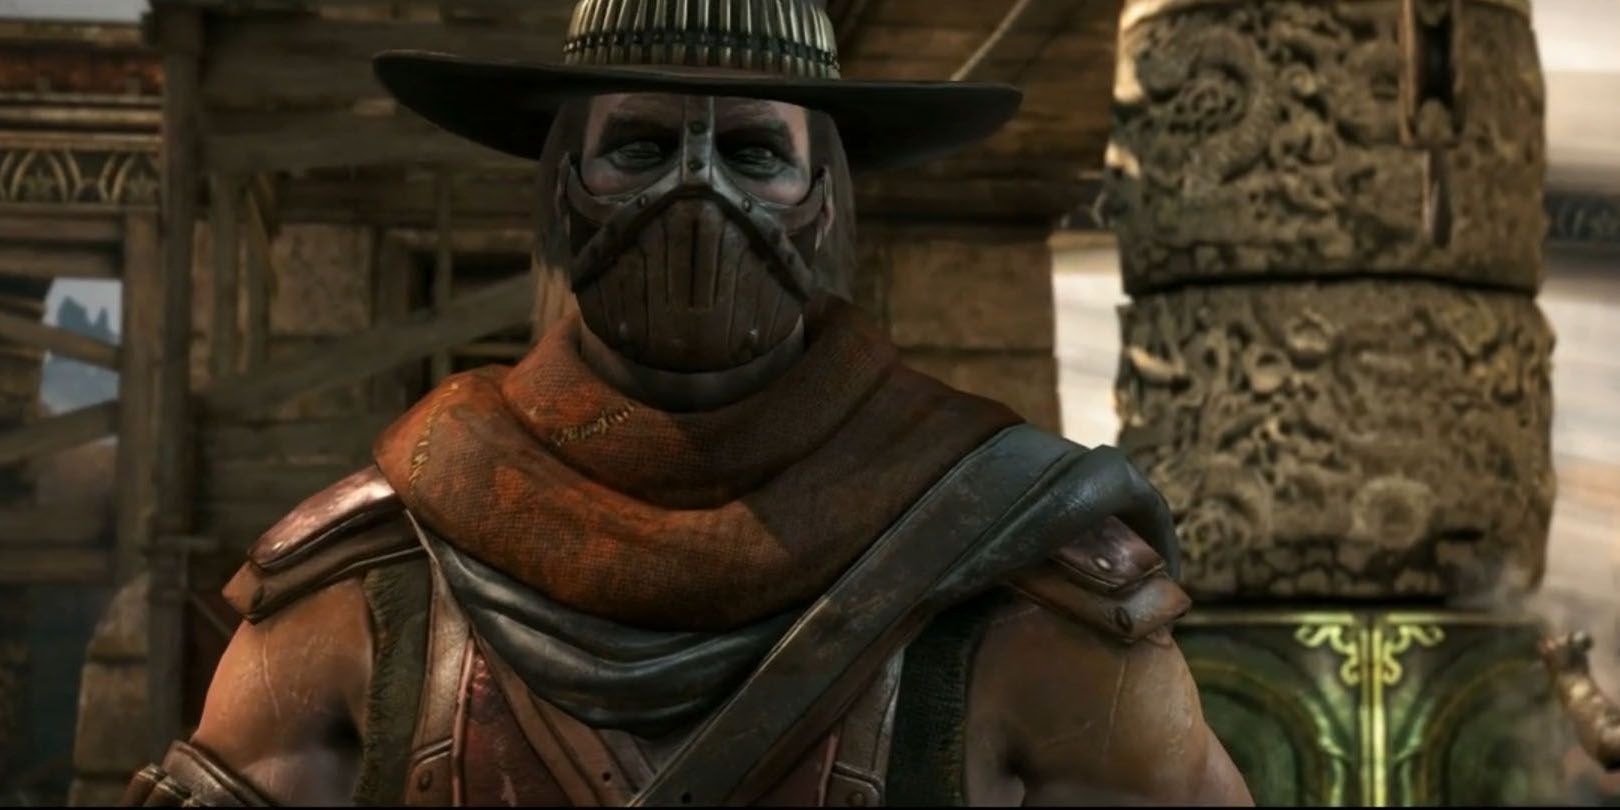 Erron Black in the Mortal Kombat video game franchise